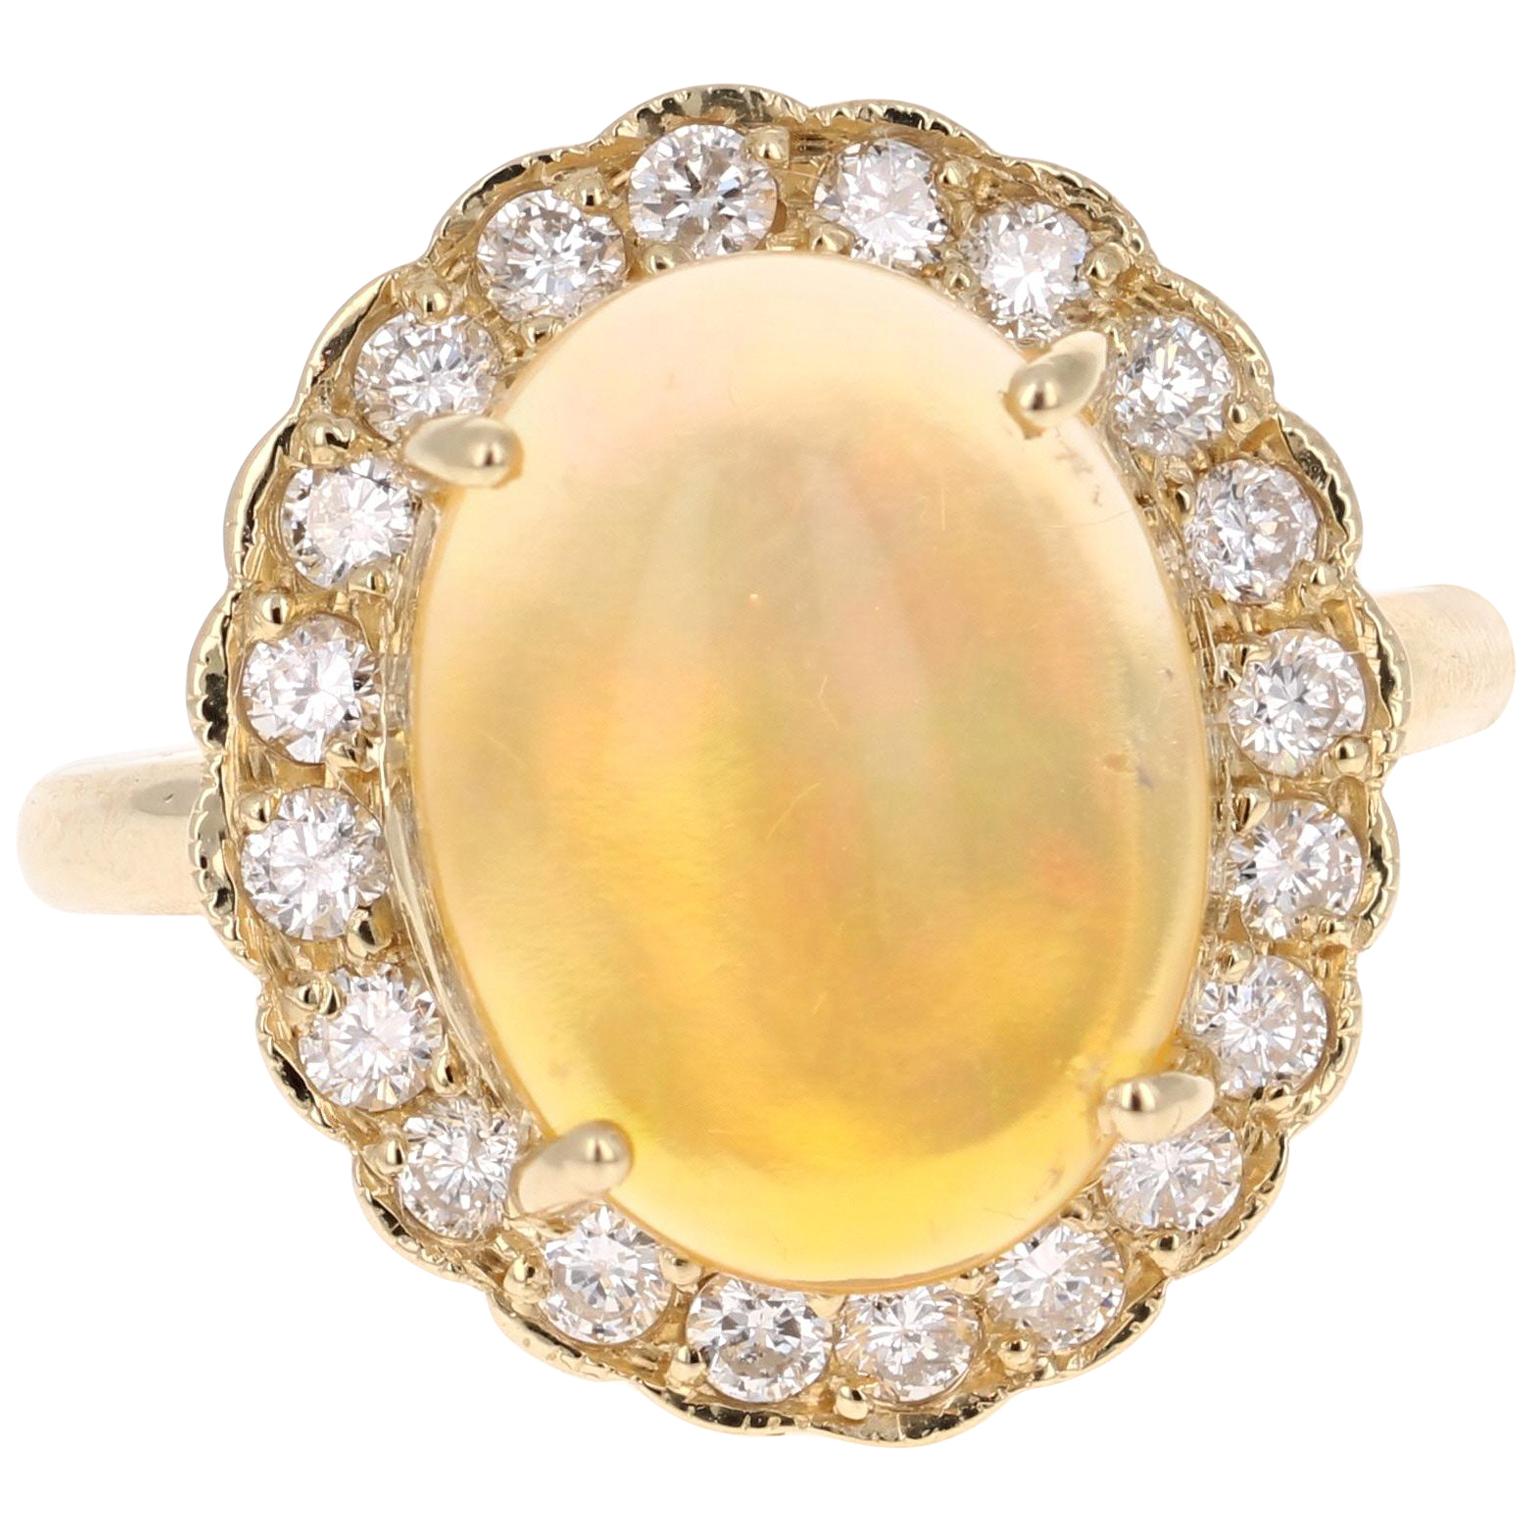 3.61 Carat Opal Diamond Cocktail Ring